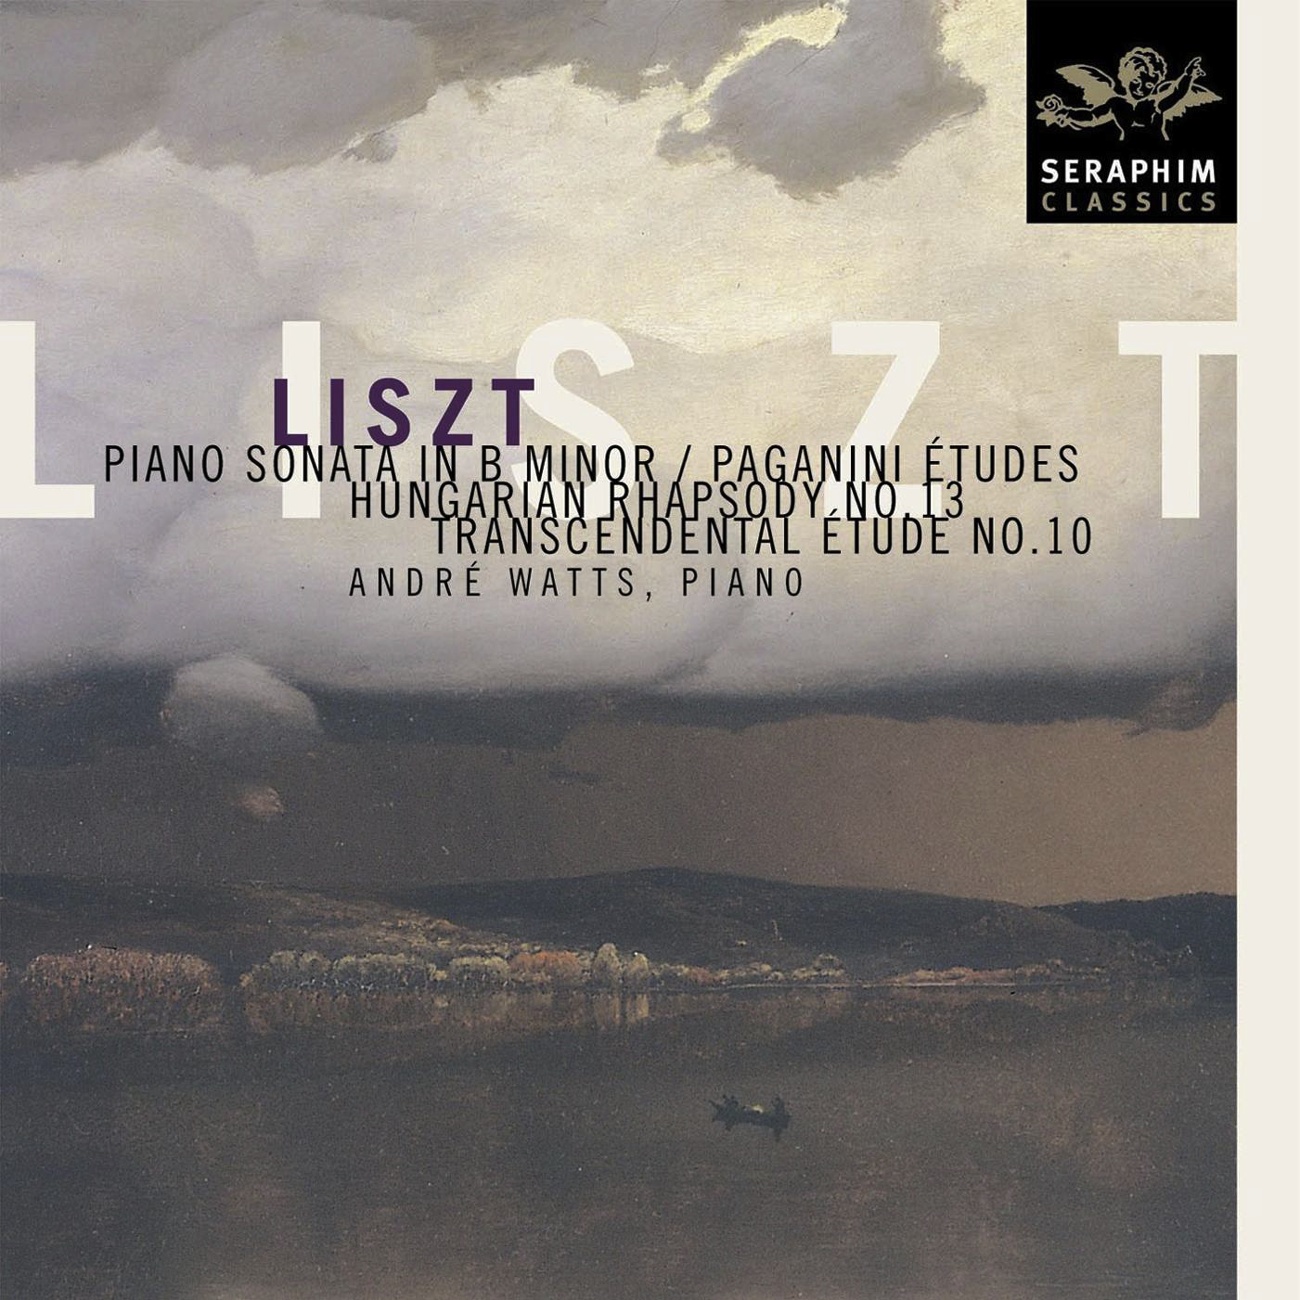 Sonata In B minor (3 pieces) (2001 Digital Remaster): Lento assai